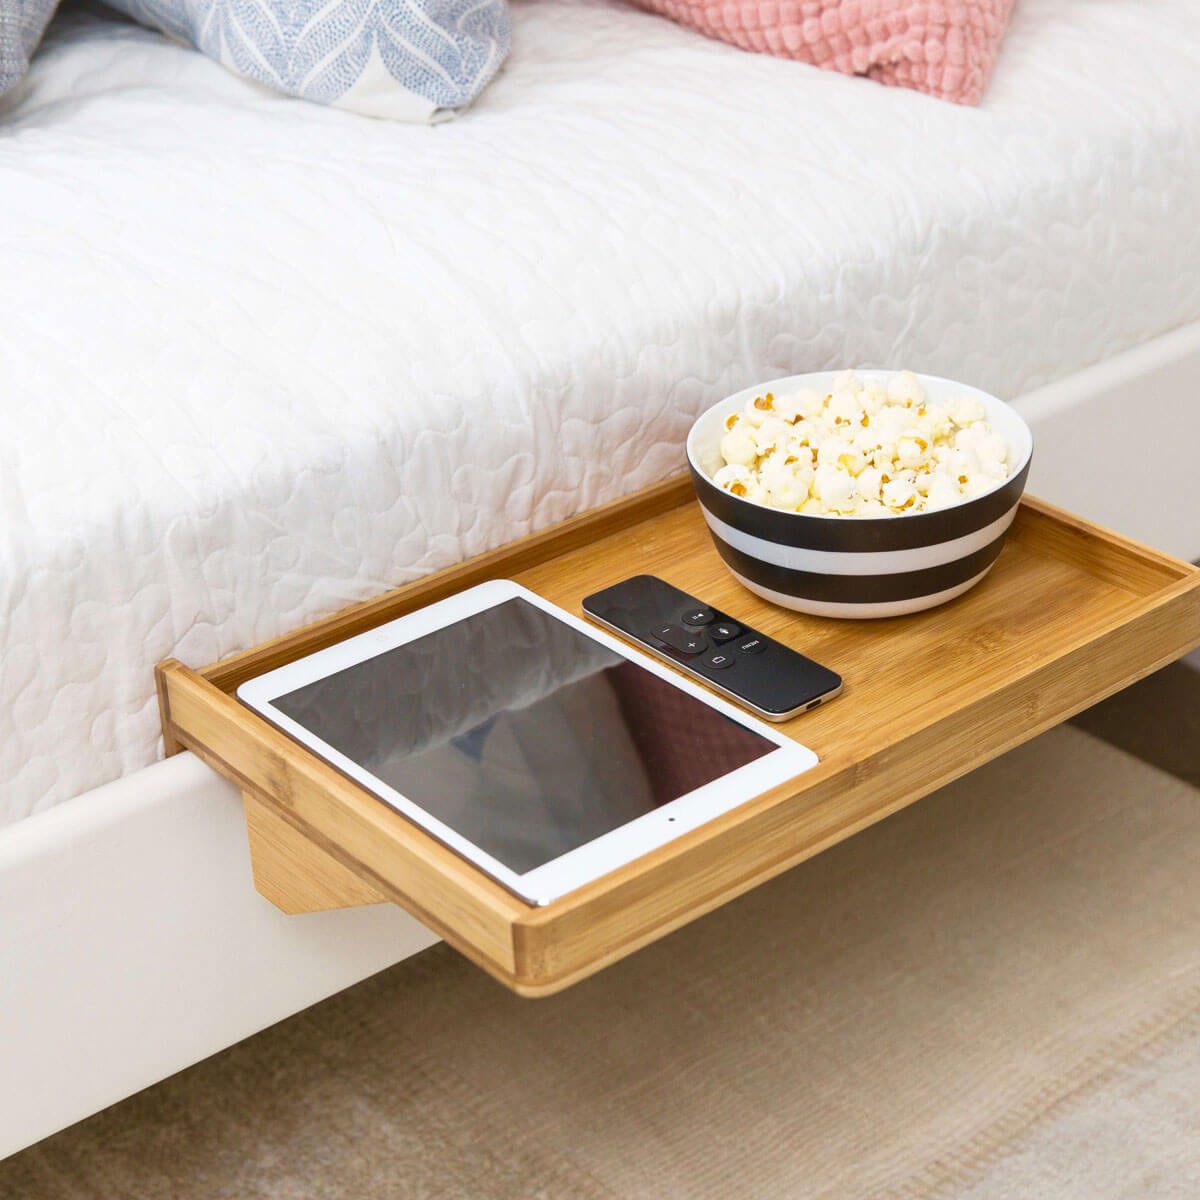 12 Ingenious Bedroom Furniture Ideas